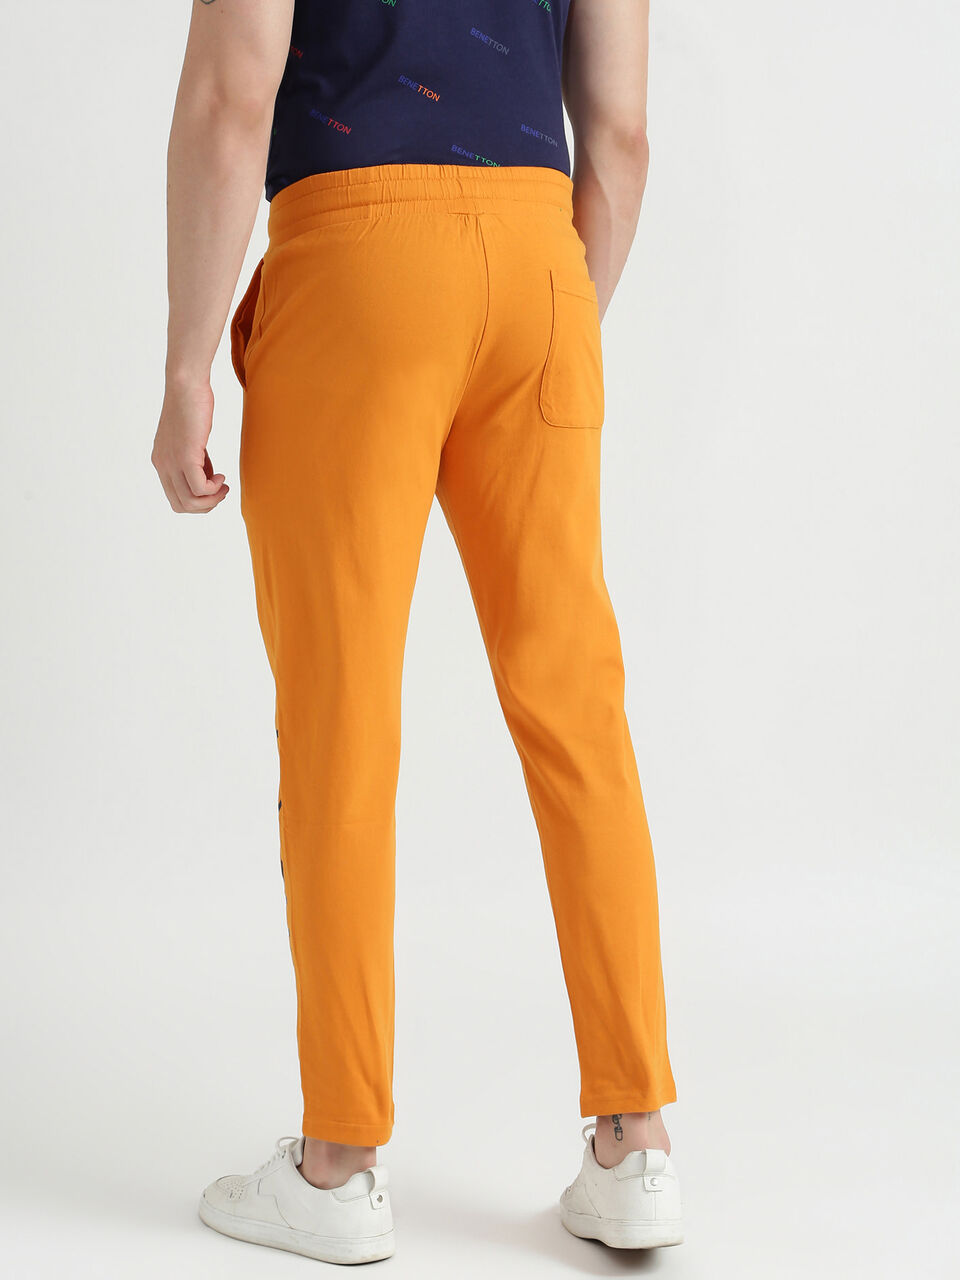 orange cotton blend track pants